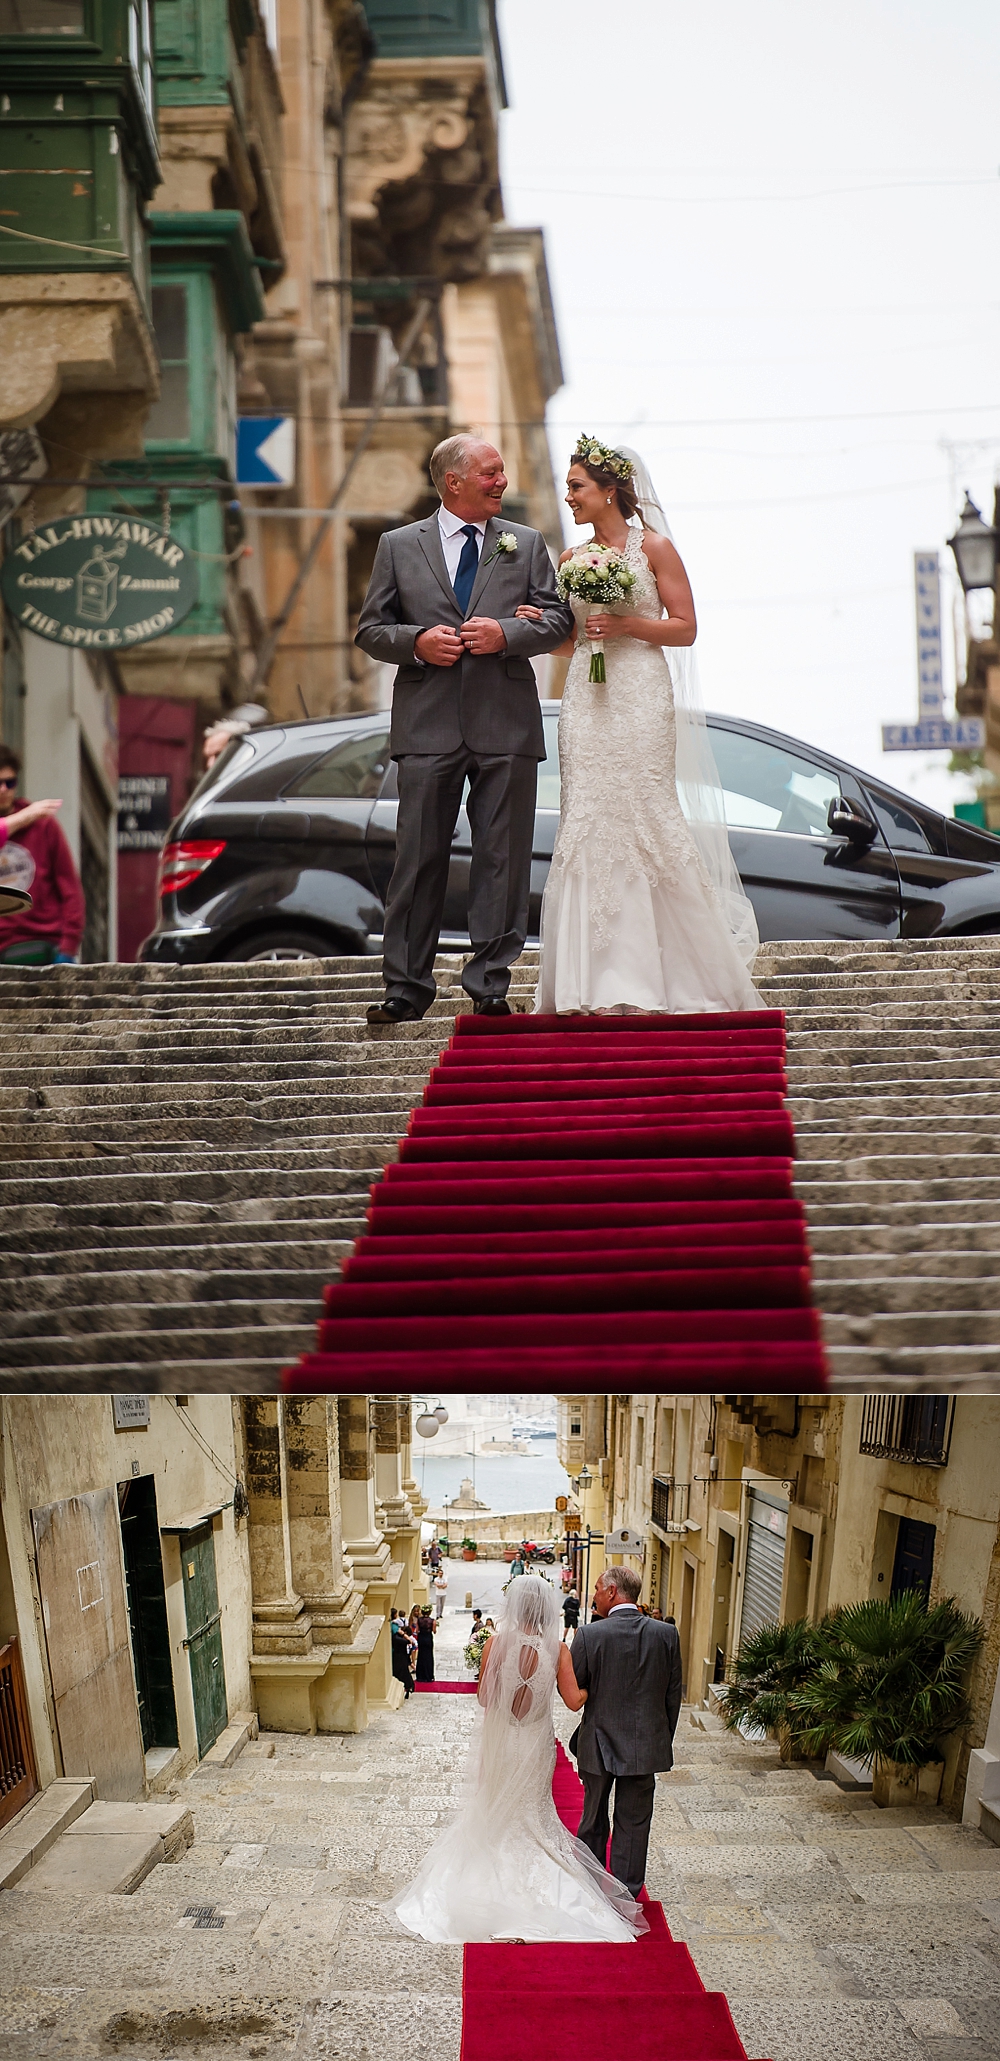 Maggie & Jody - Razzett L'Abjad Wedding - Wedding Photography Malta - Shane P. Watts